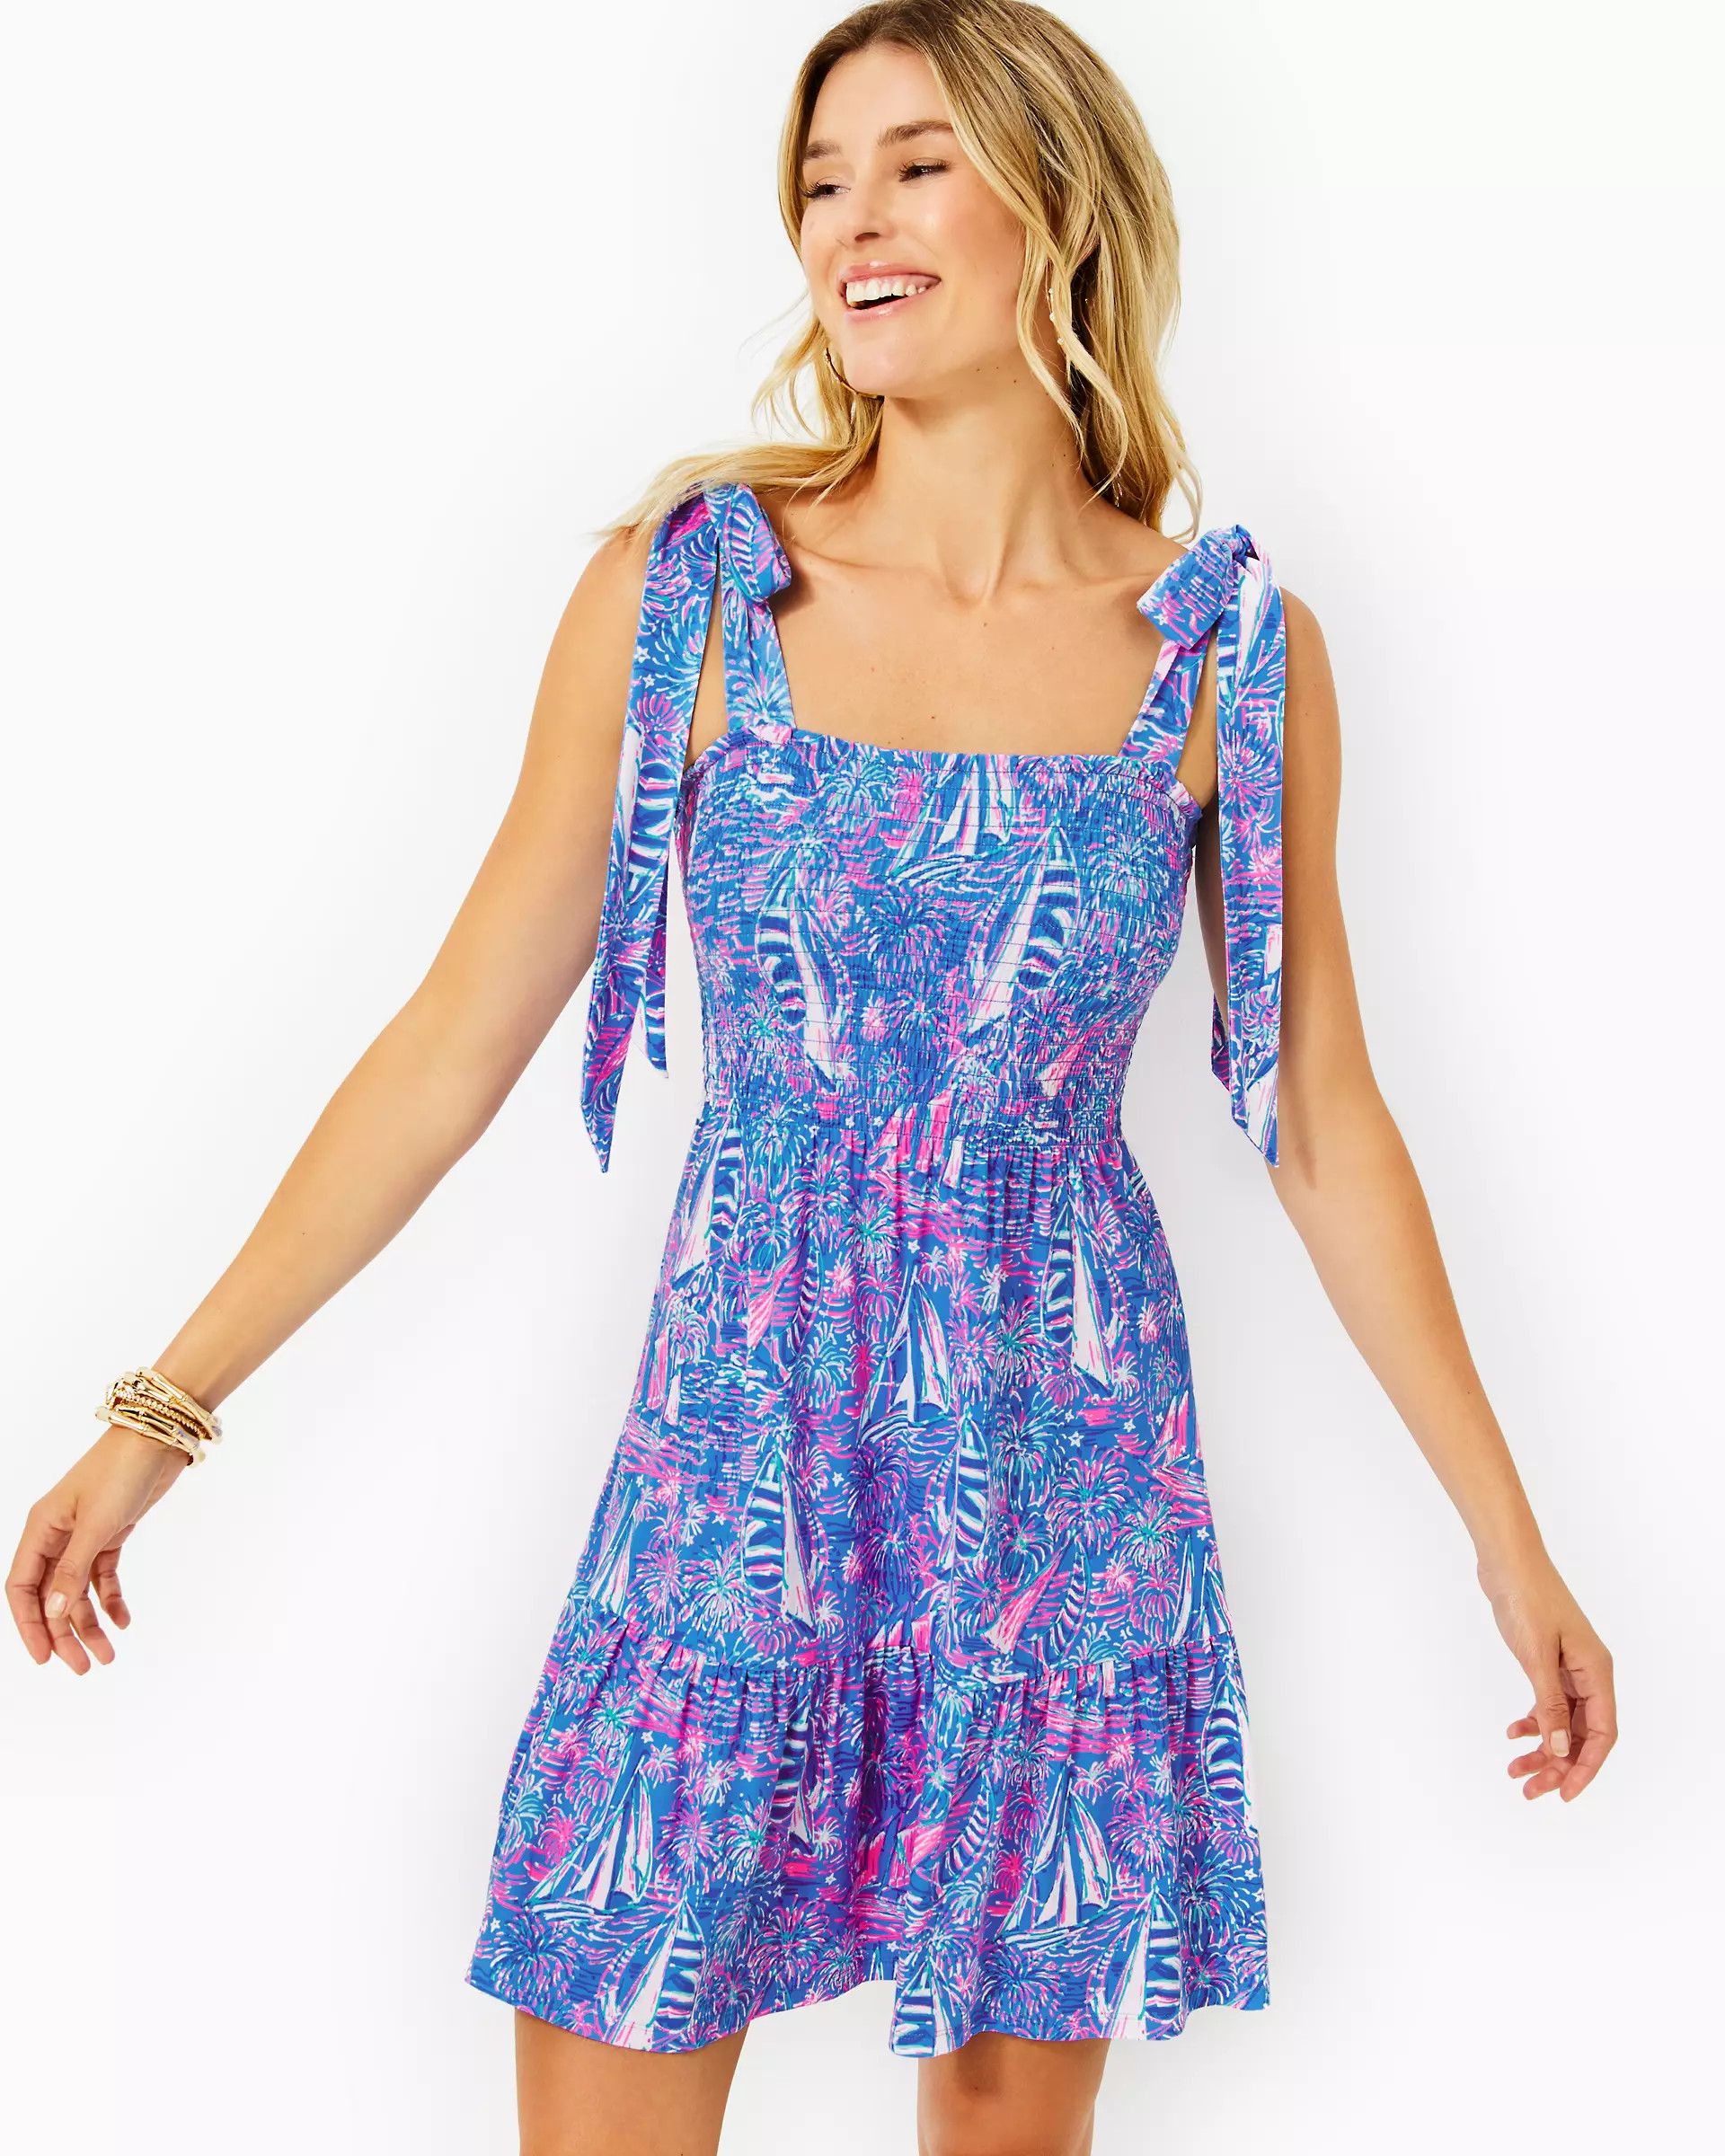 Lilly Pulitzer Kailua Smocked Dress | Lilly Pulitzer